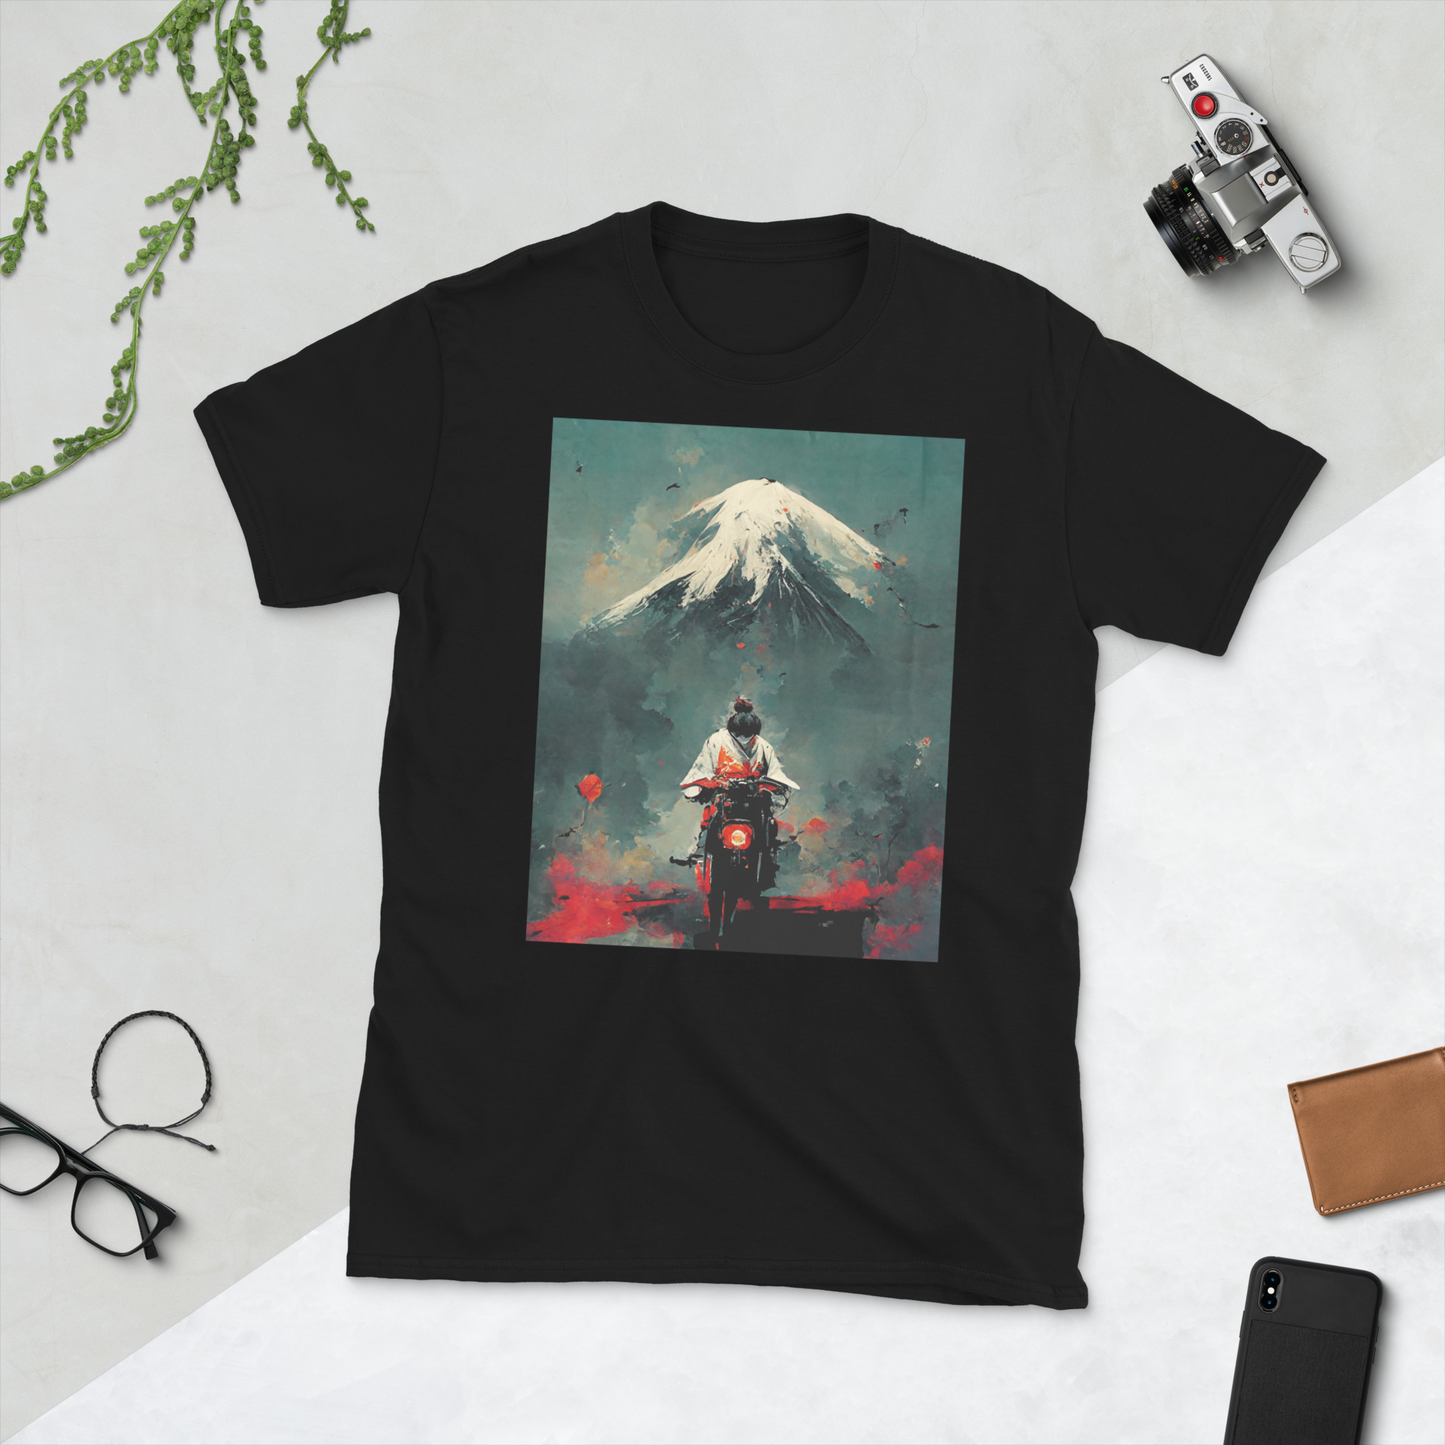 Riding Samurai - Short-Sleeve Unisex T-Shirt